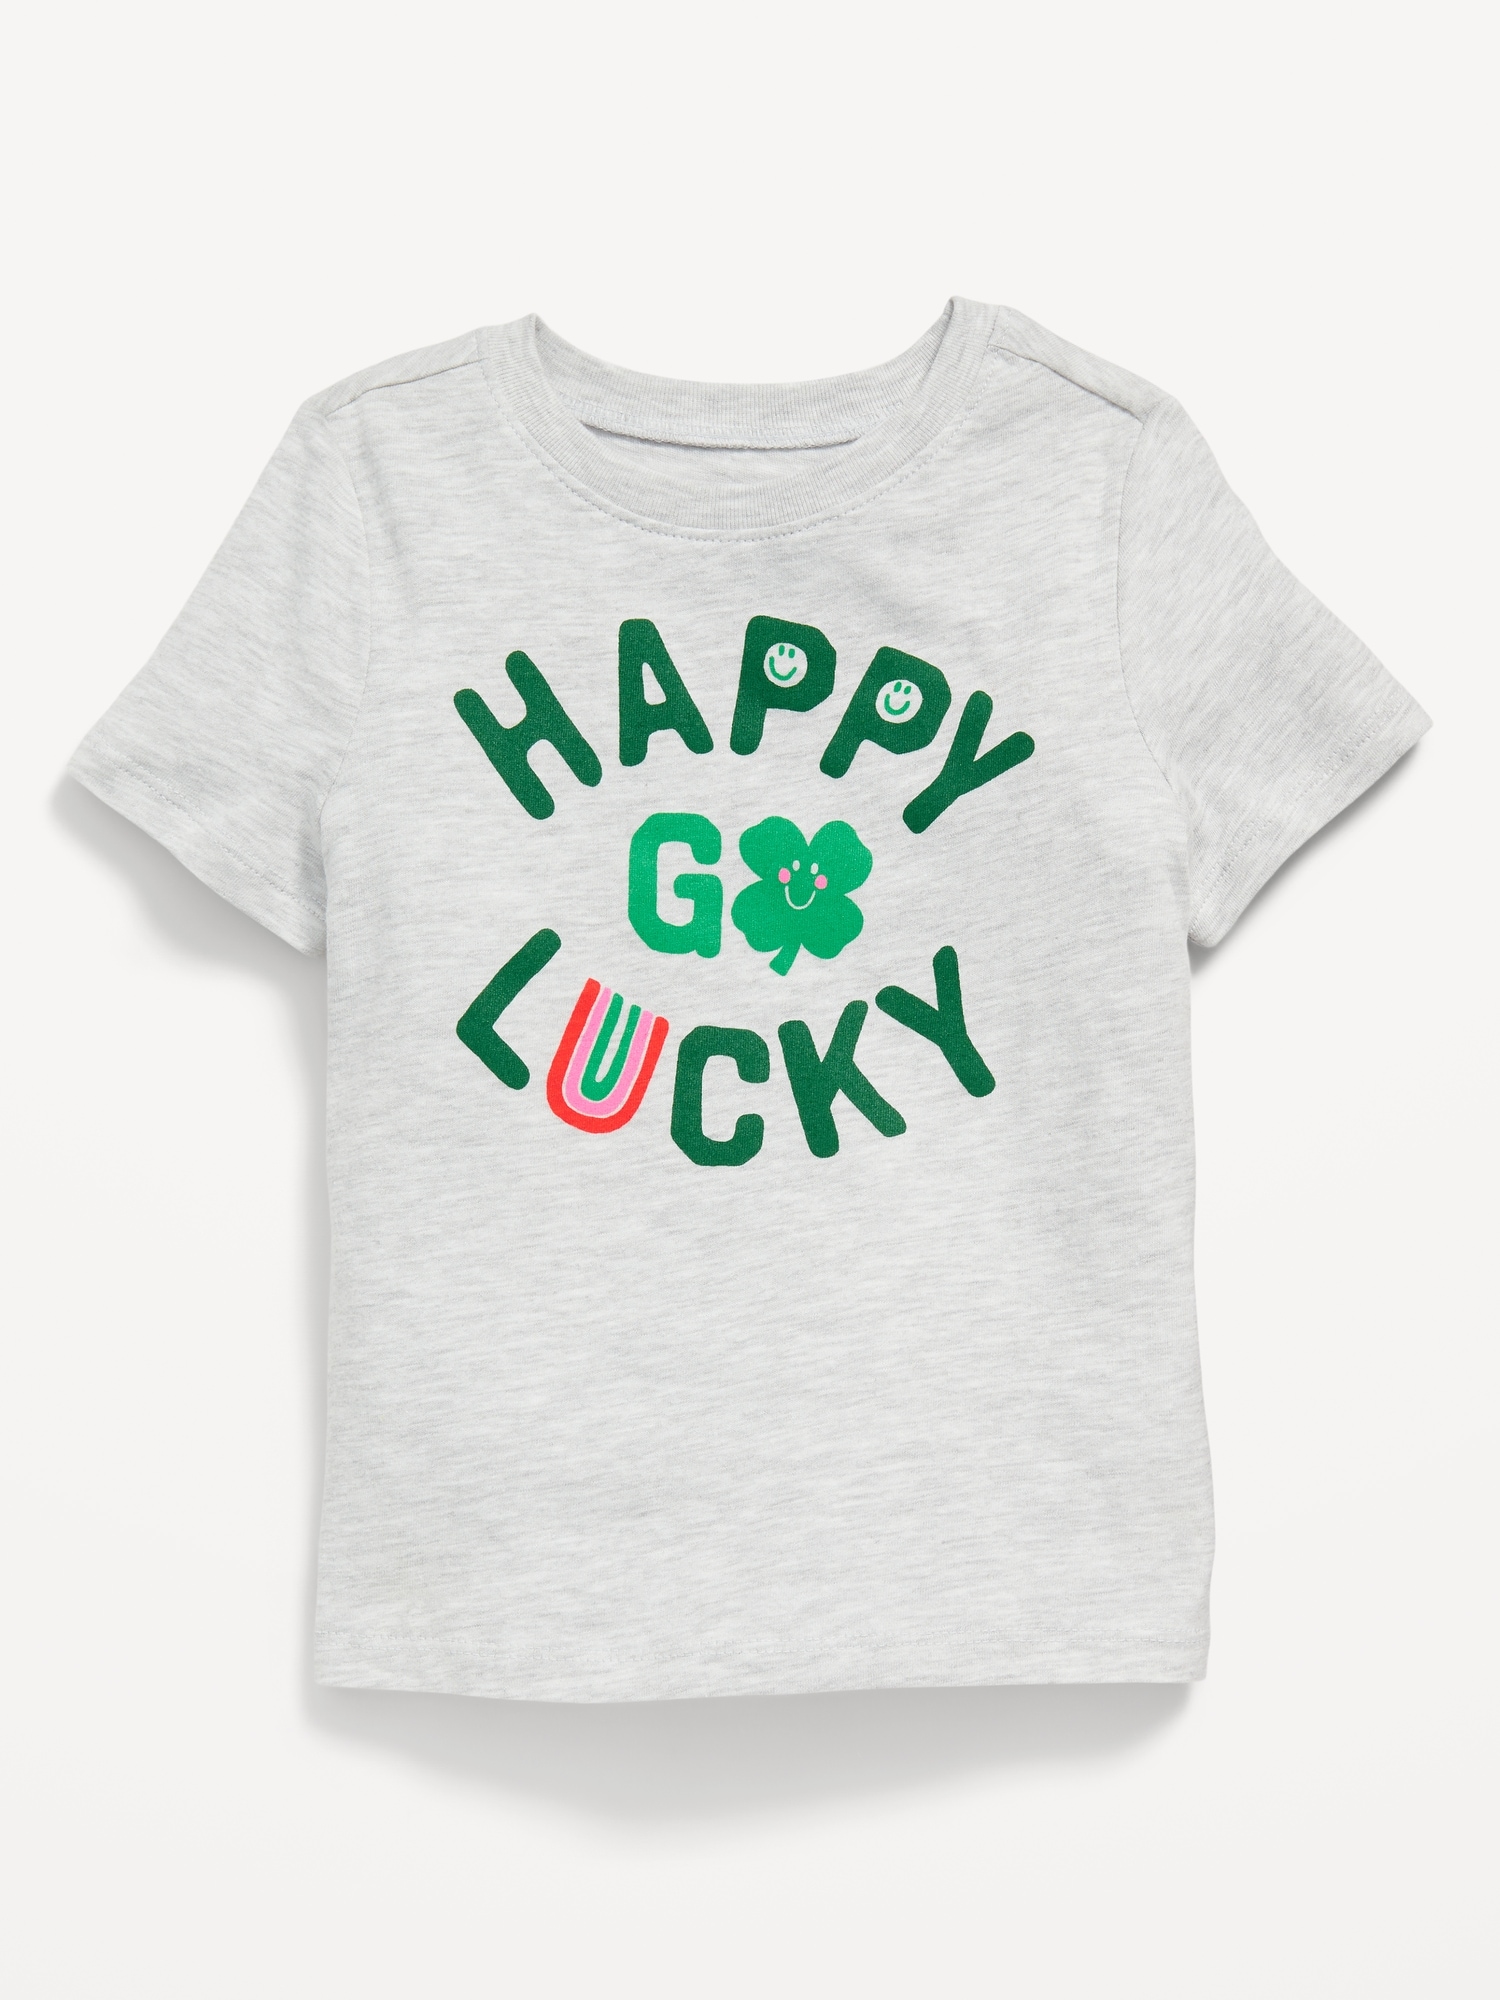  Green Lucky Shirt, Unisex Luck tshirt, Lucky Shirt, Lucky  shirts women, St patricks day outfits for toddlers, Customize t-shirts, St  patricks day shirts, Clover Shirts, Funny Toddler : Handmade Products